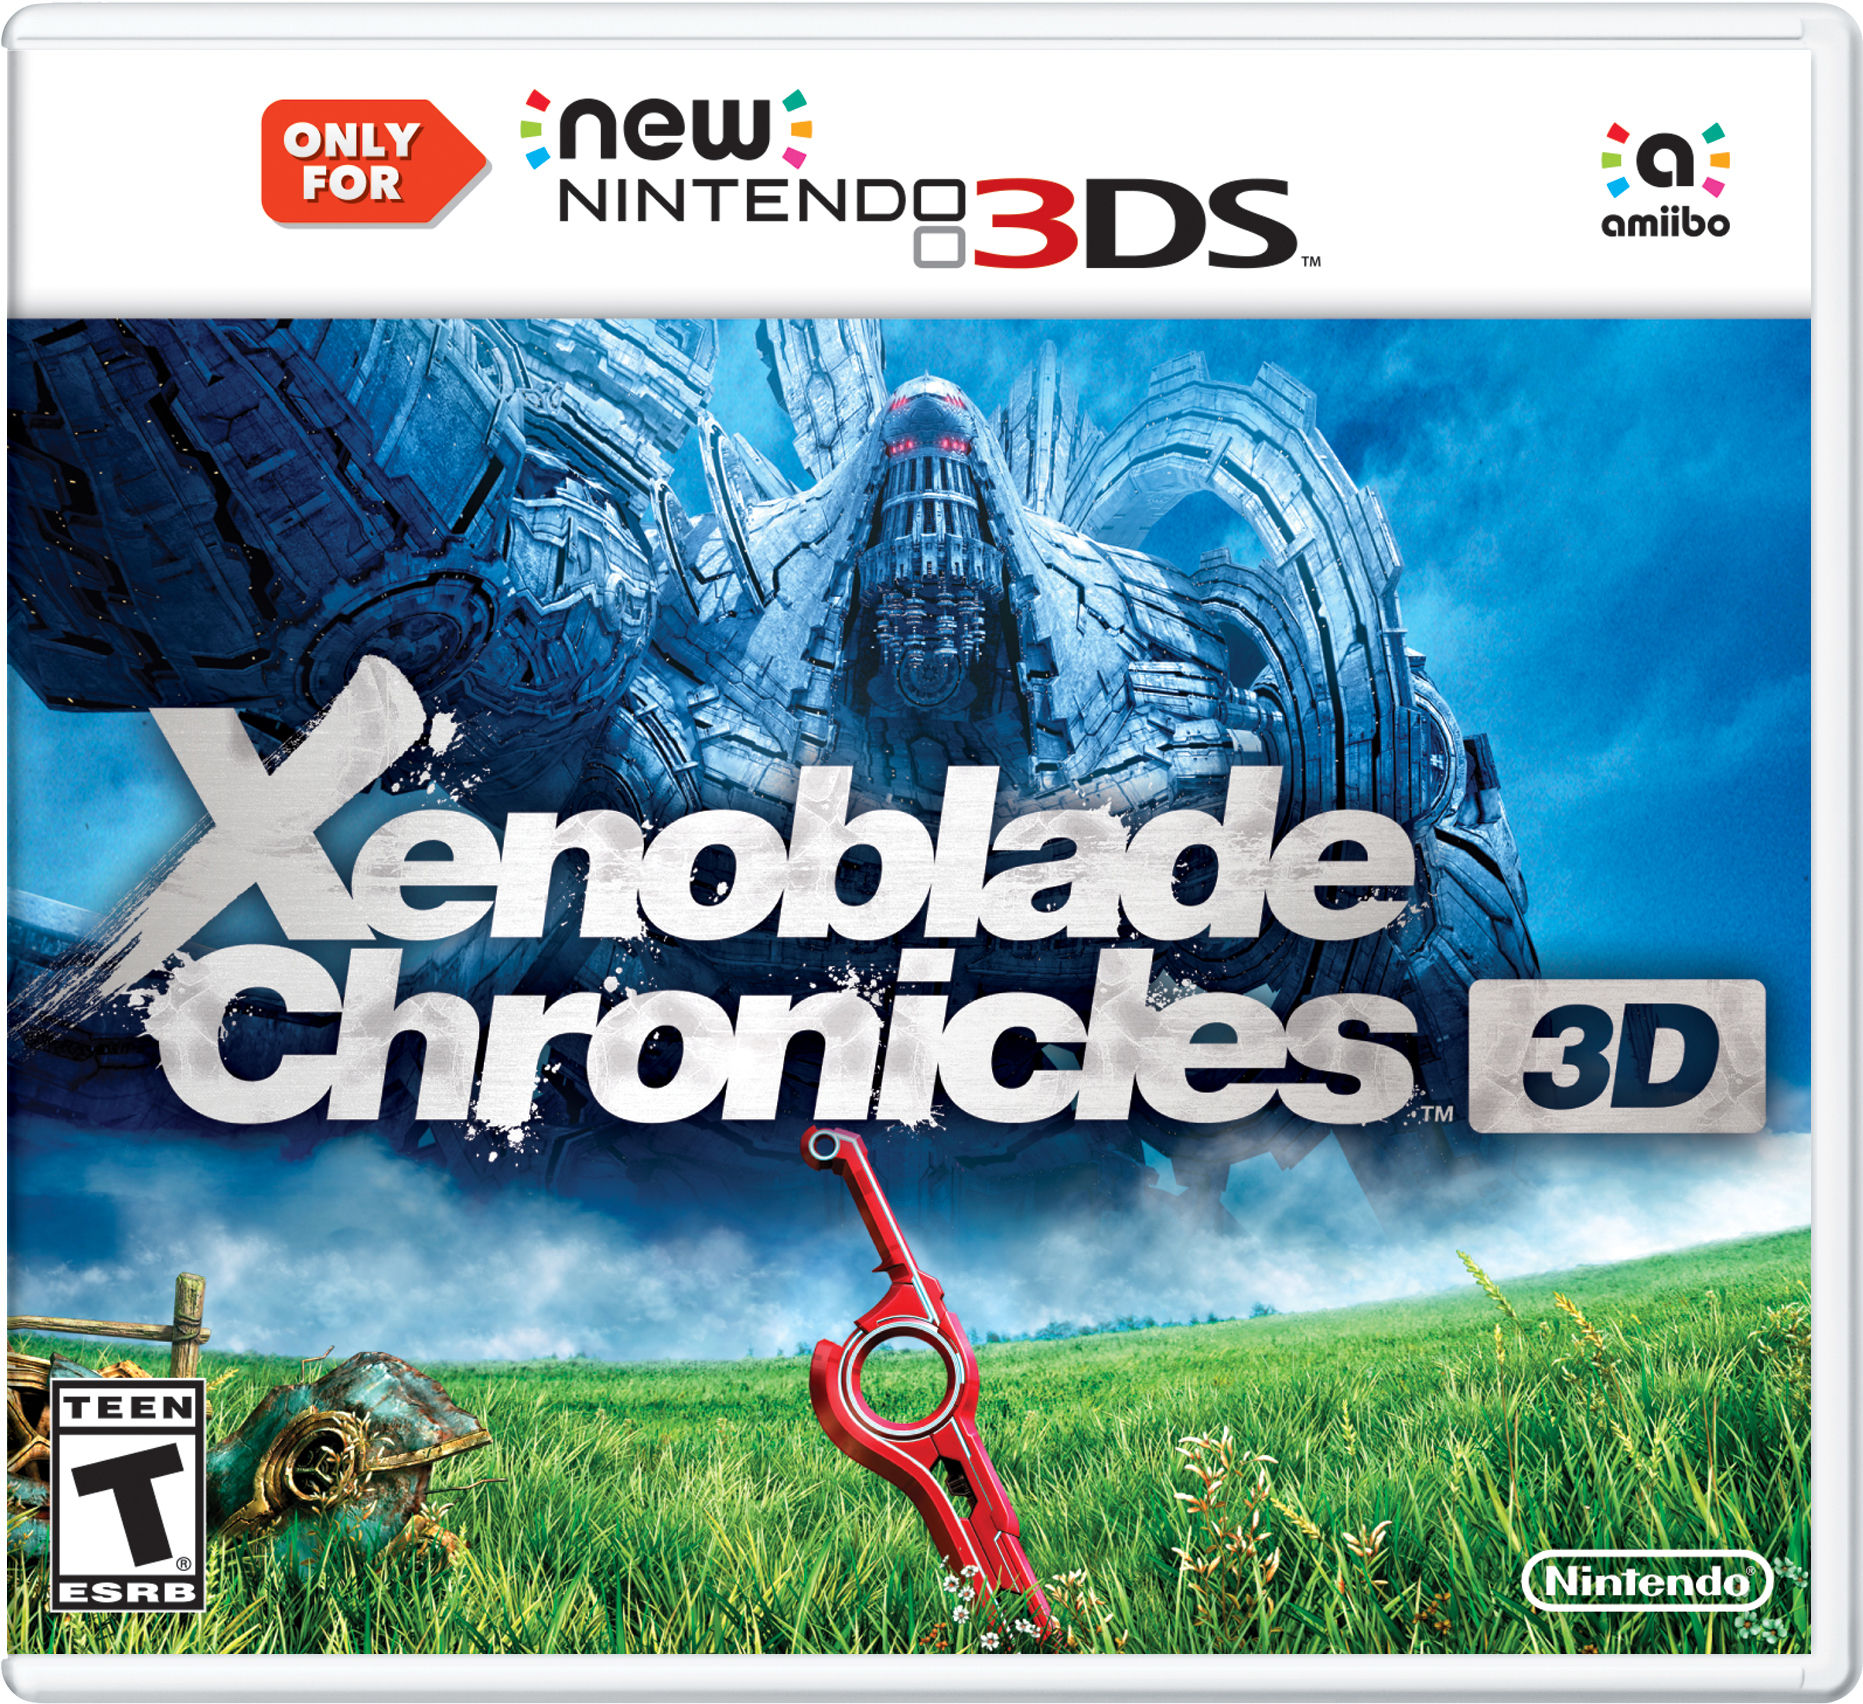  XenoBlade Chronicles : Video Games